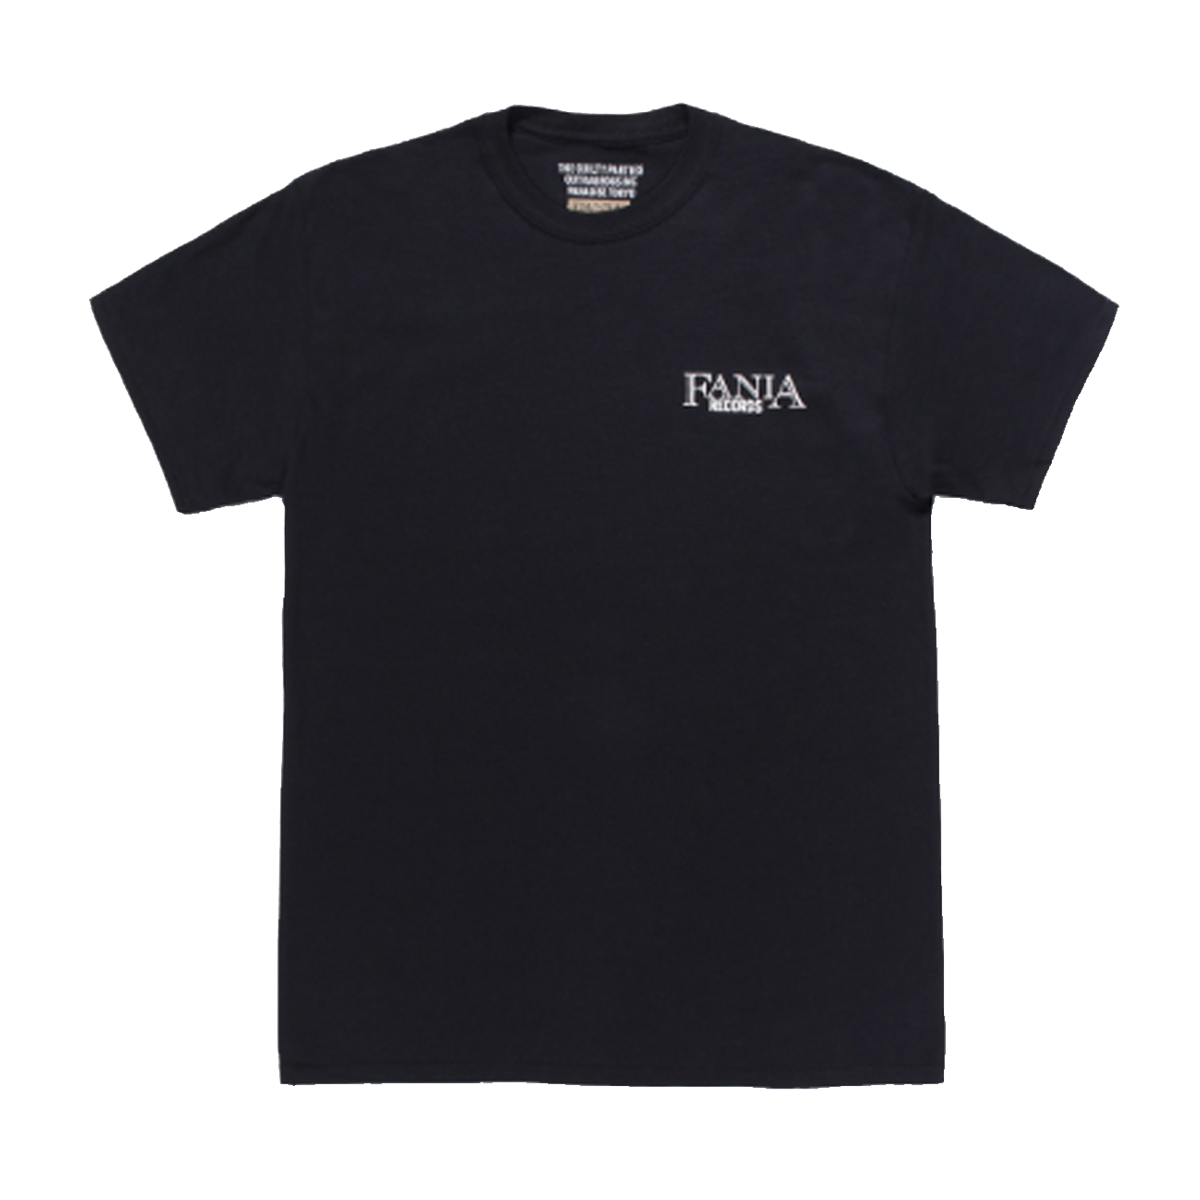 Fania Crew Neck Black T-Shirt (Wacko Maria)